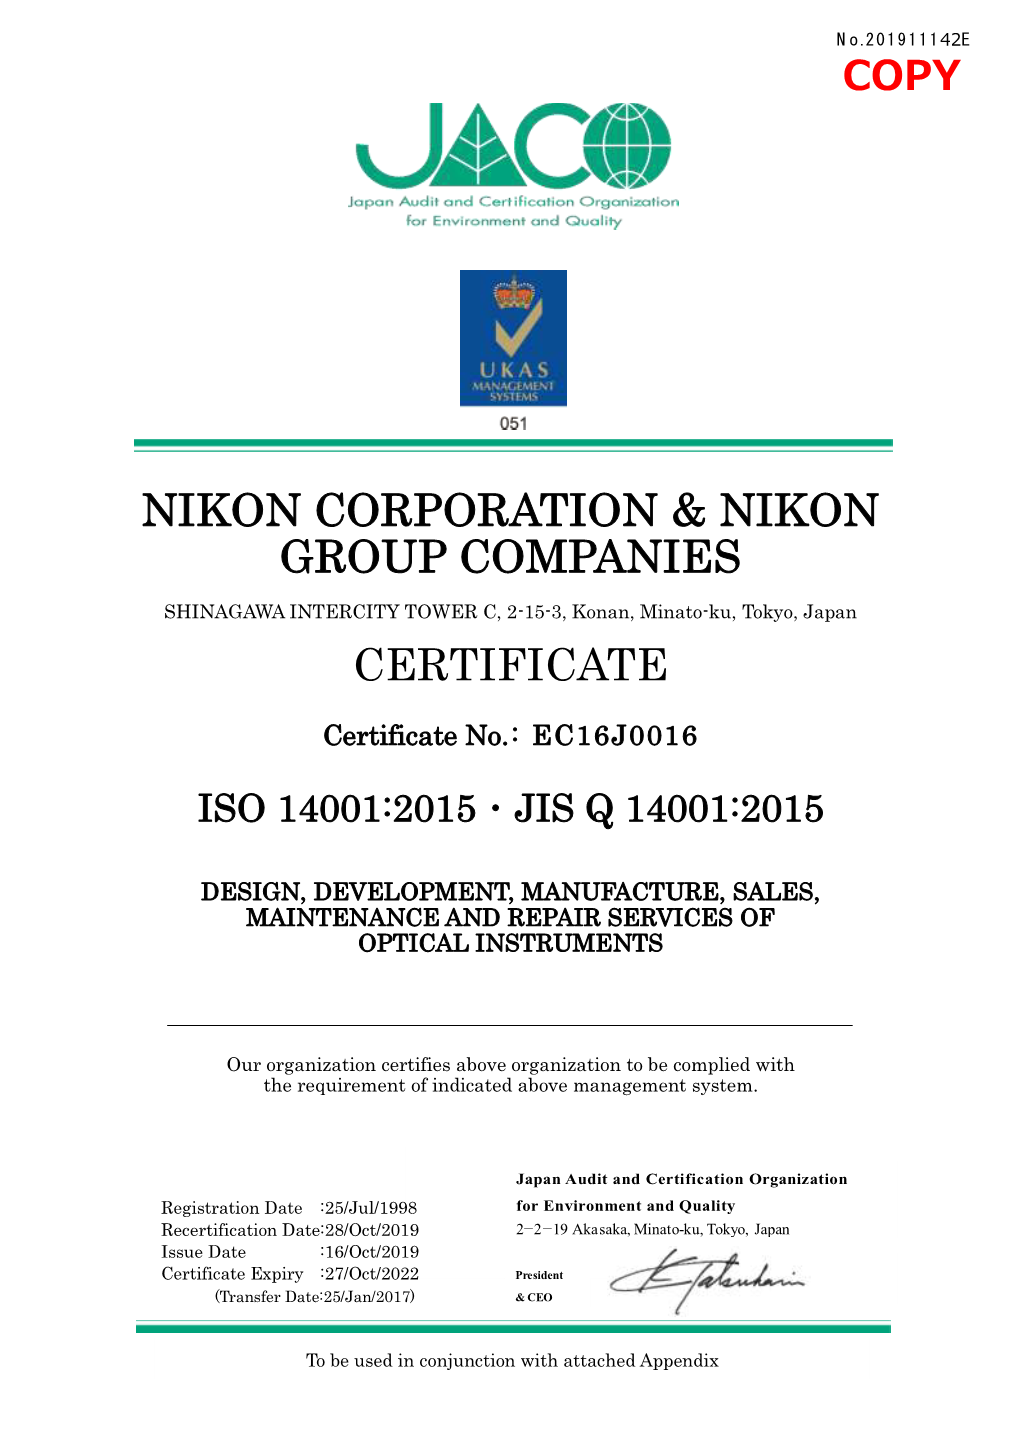 Nikon Corporation & Nikon Group Companies Certificate